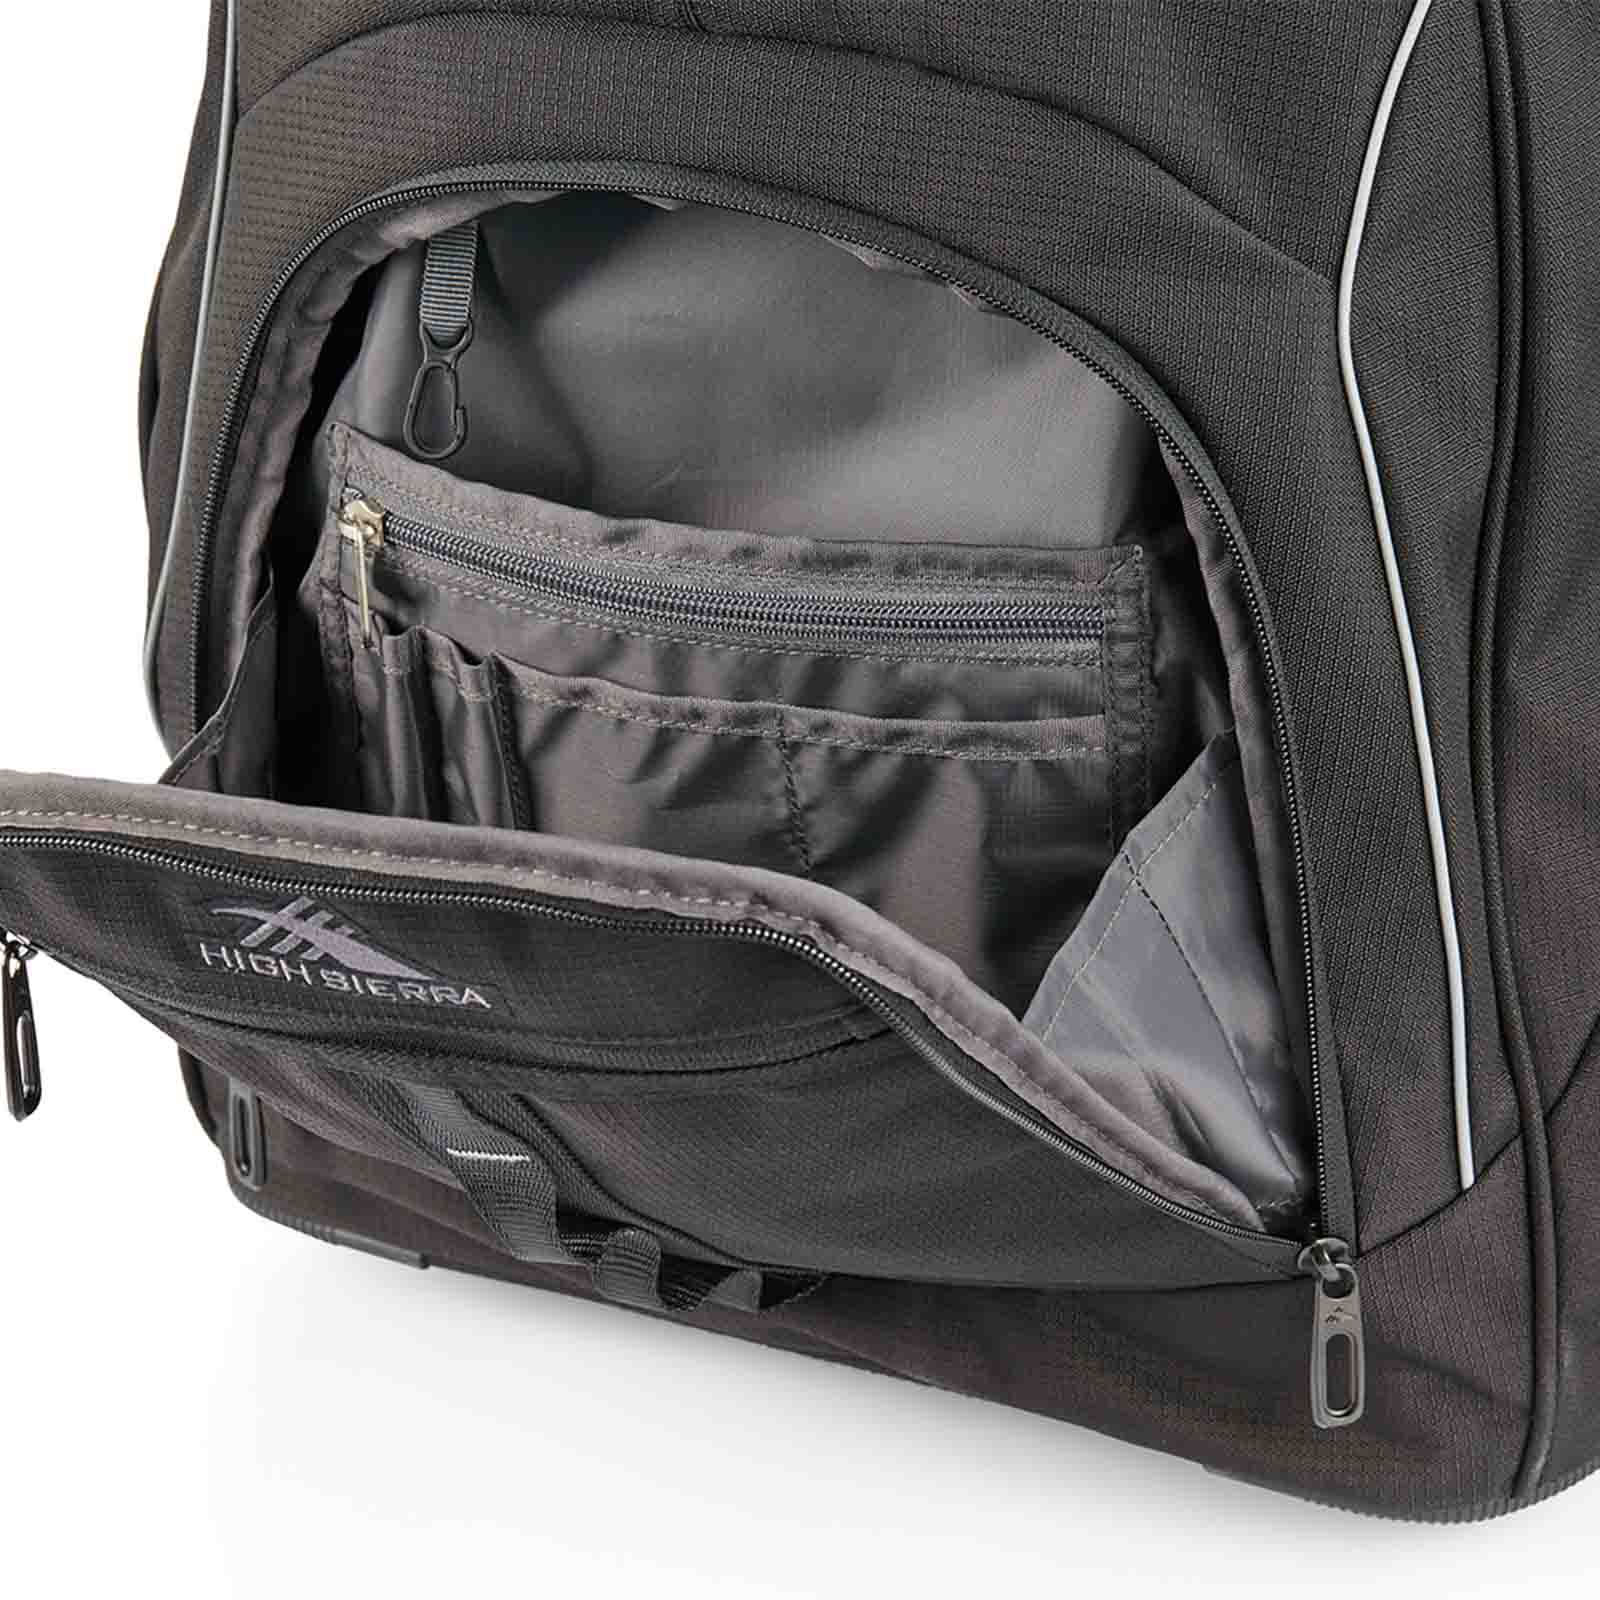 High-Sierra-Access-3-Eco-Pro-16-Inch-Wheeled-Laptop-Backpack-Black-Pocket